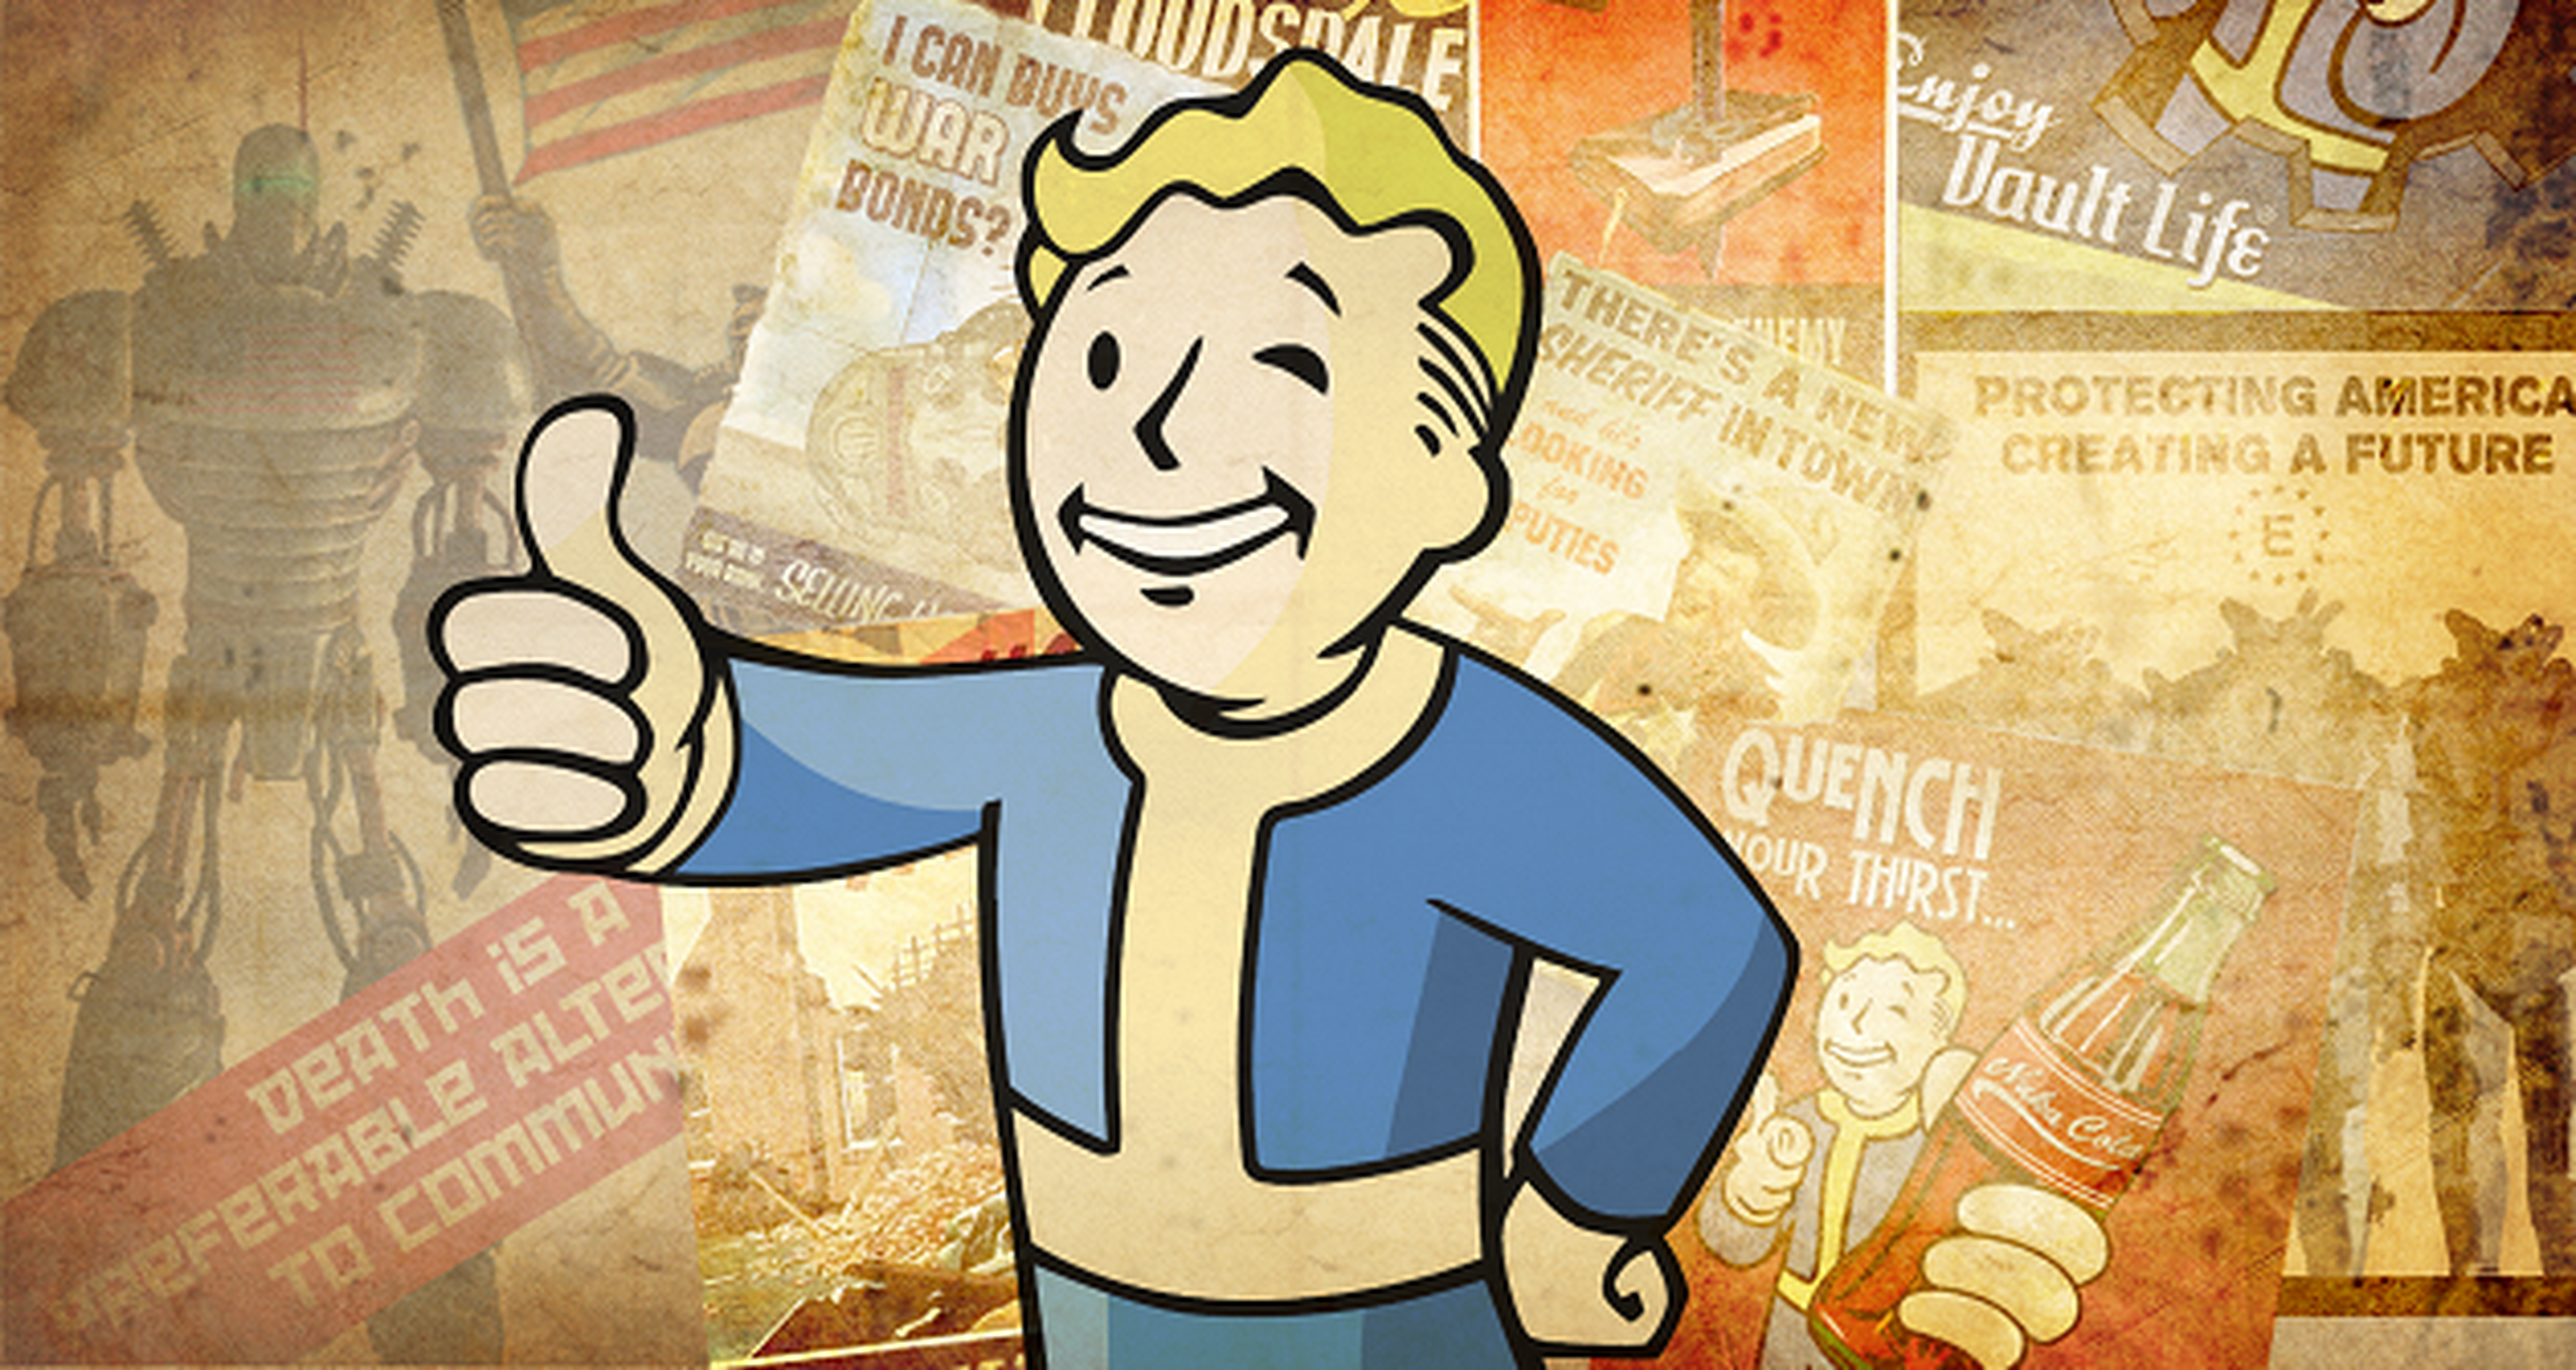 Fallout 4, comparativa con Fallout 3 en imágenes